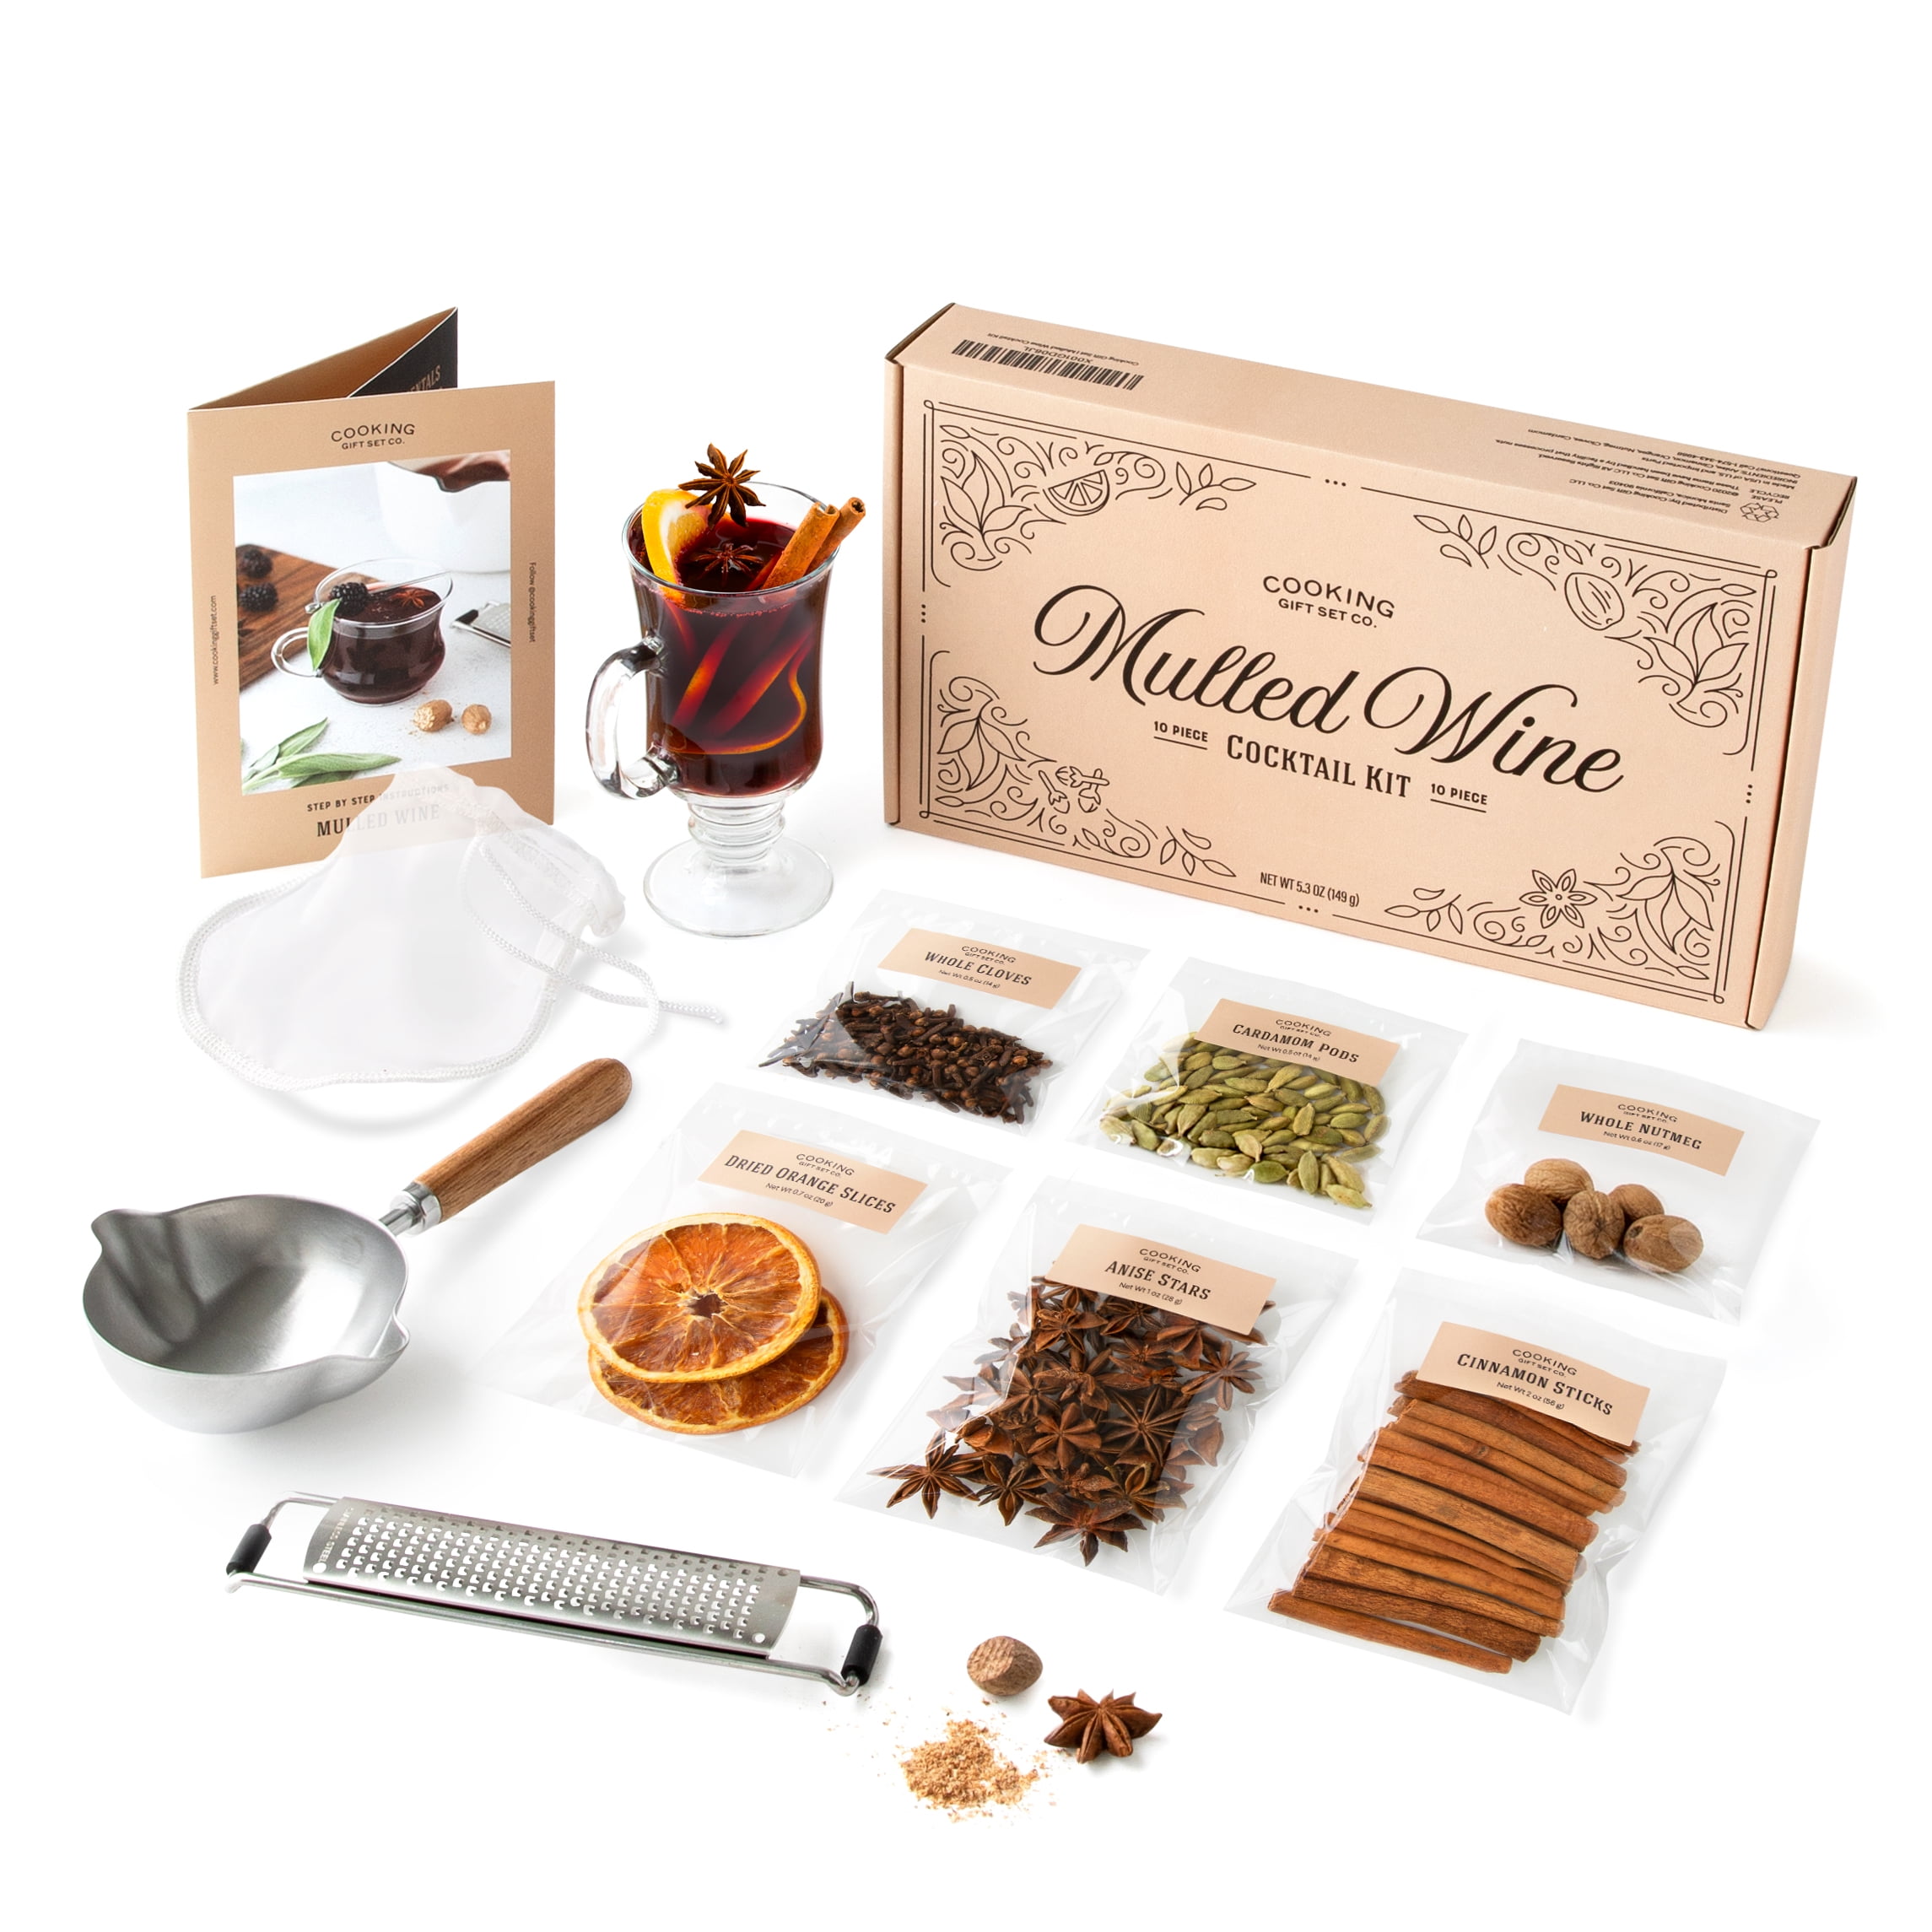 Cooking Gift Set, Mulled Wine Kit